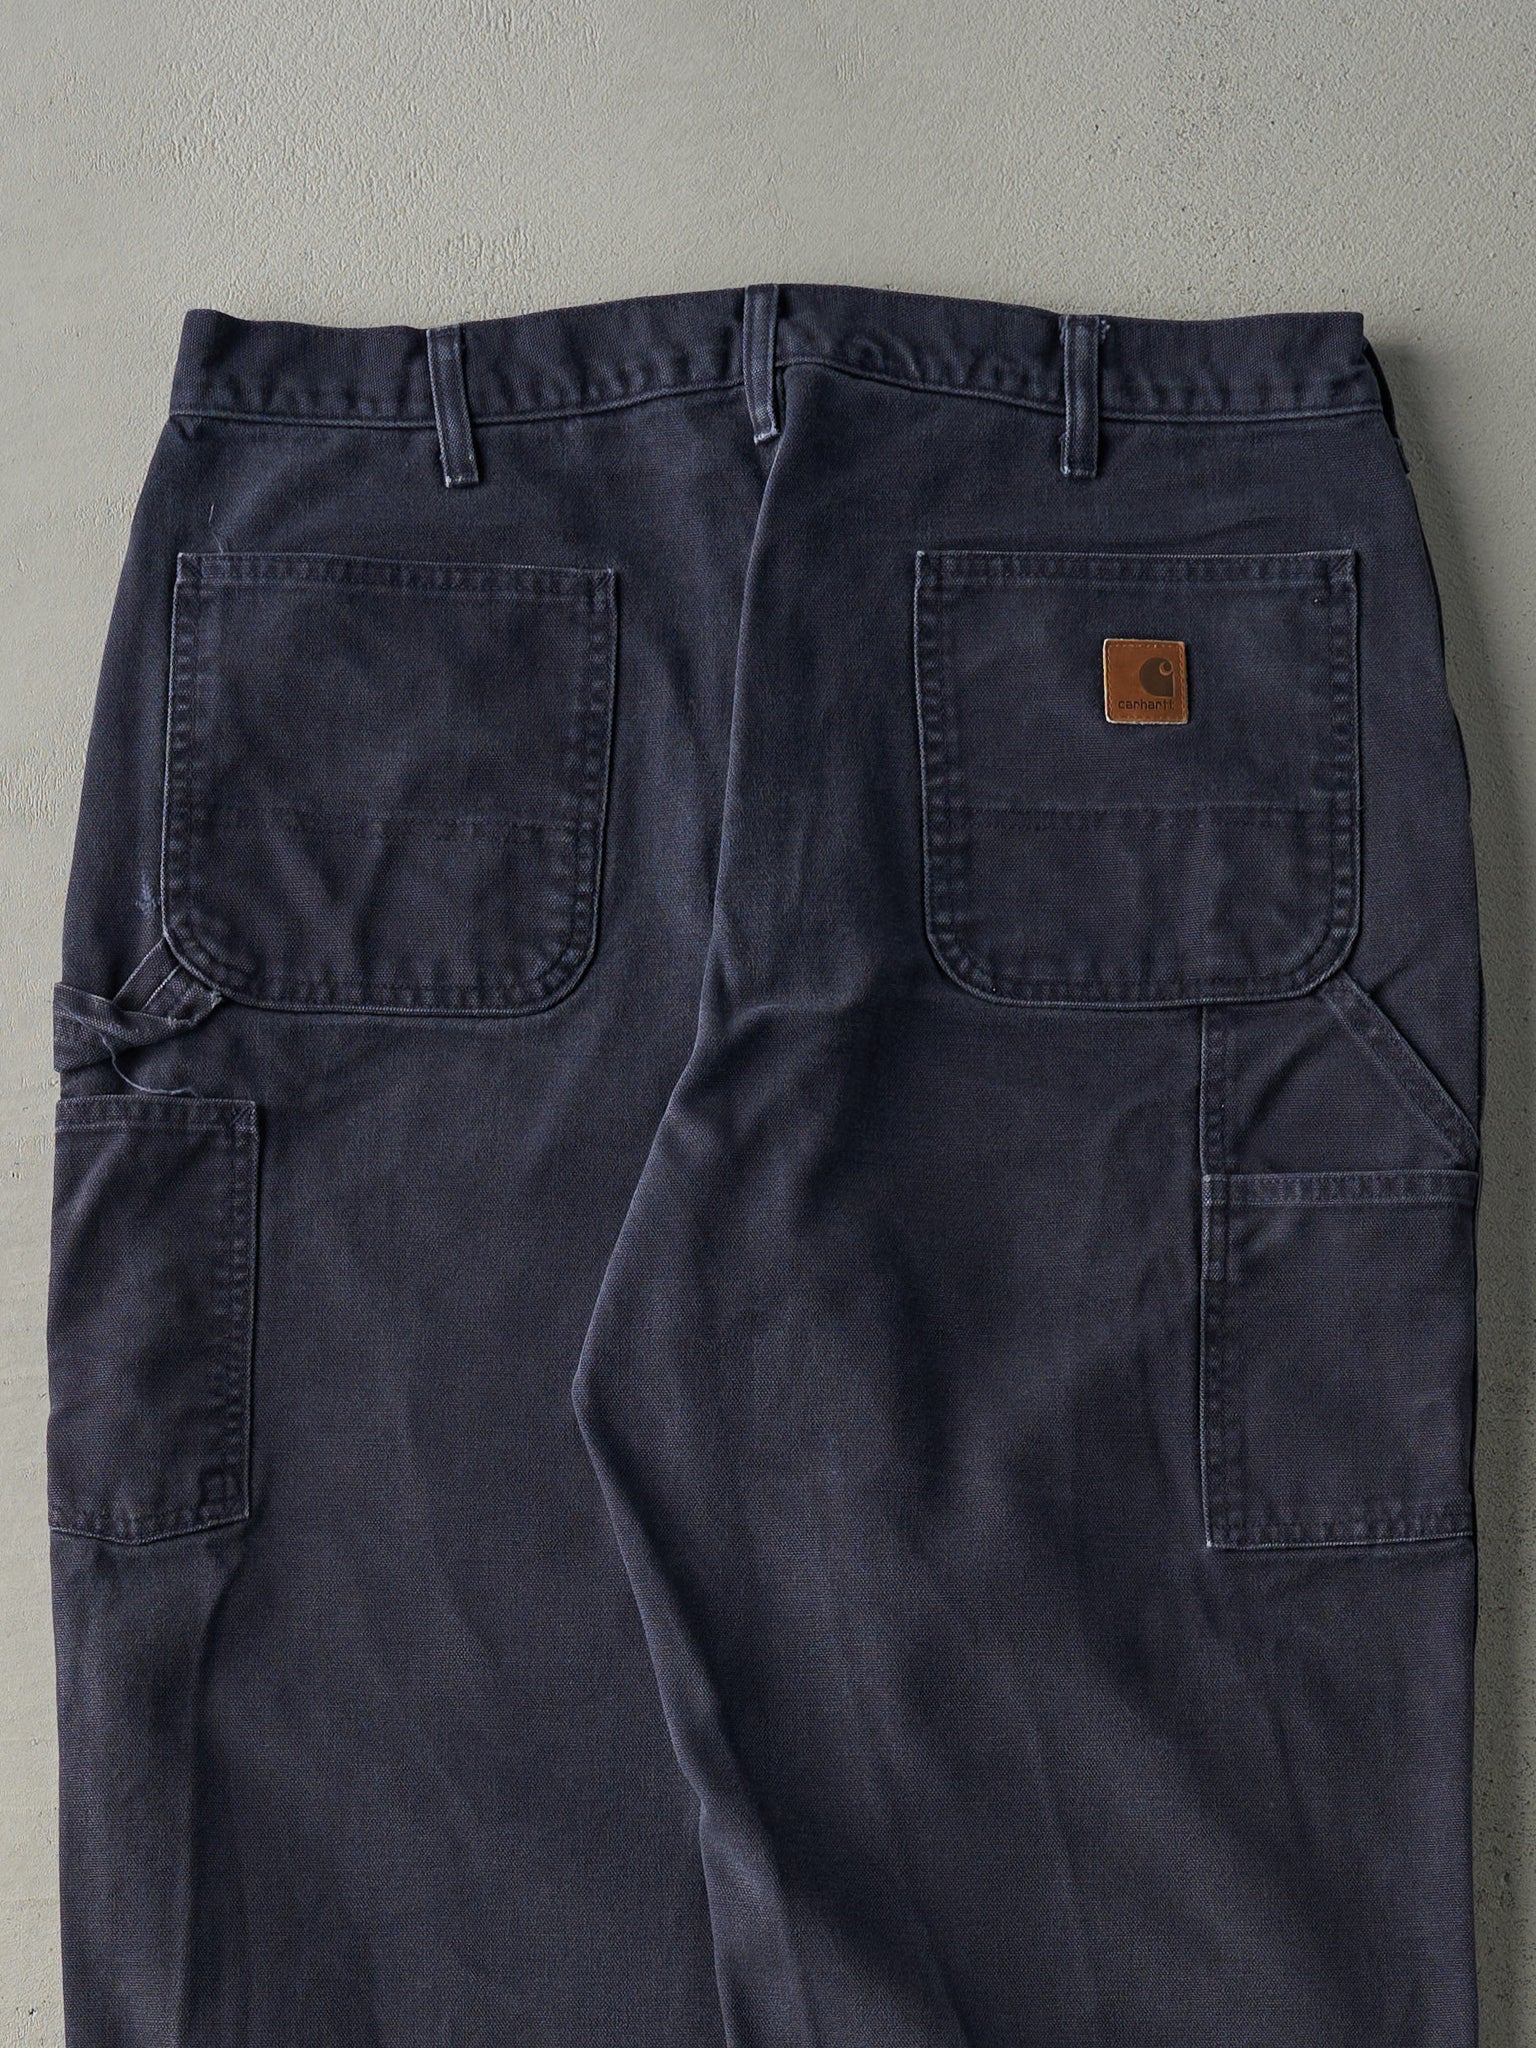 Vintage 90s Navy Blue Carhartt Dungaree Fit Carpenter Pants (36x31.5)